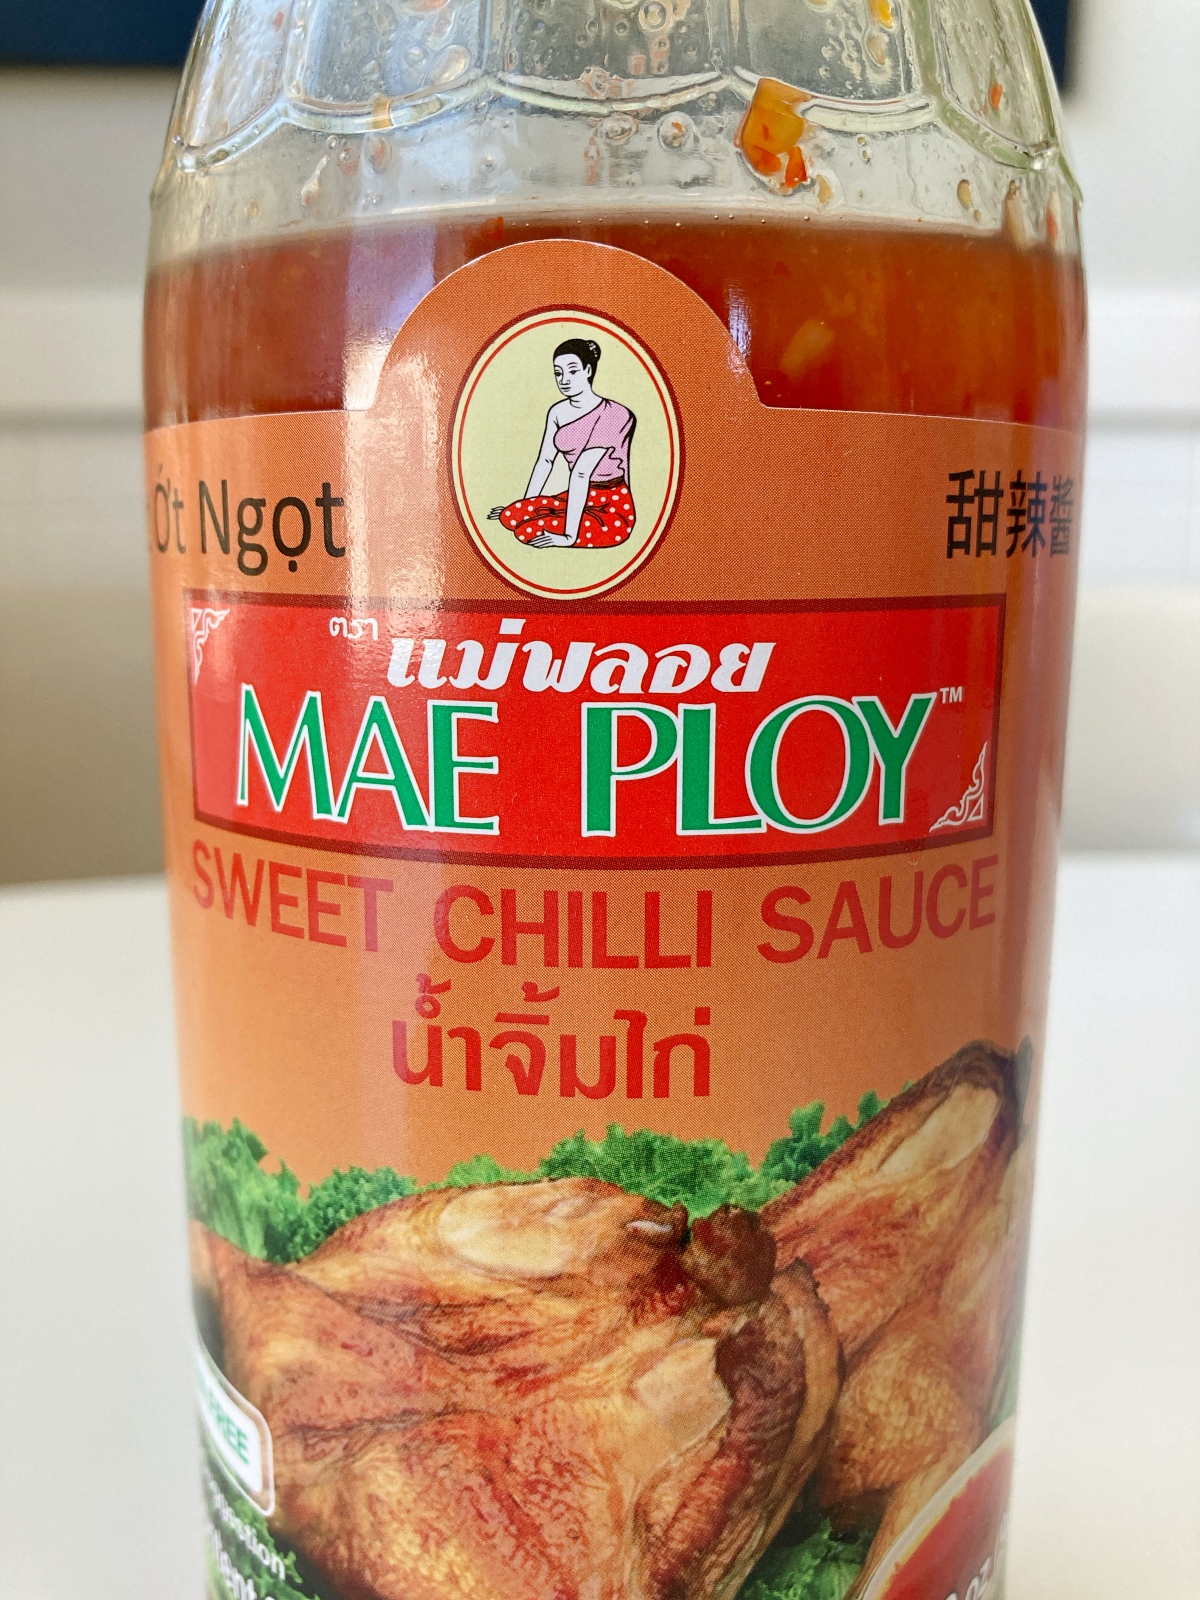 Mae Plot sweet chili sauce